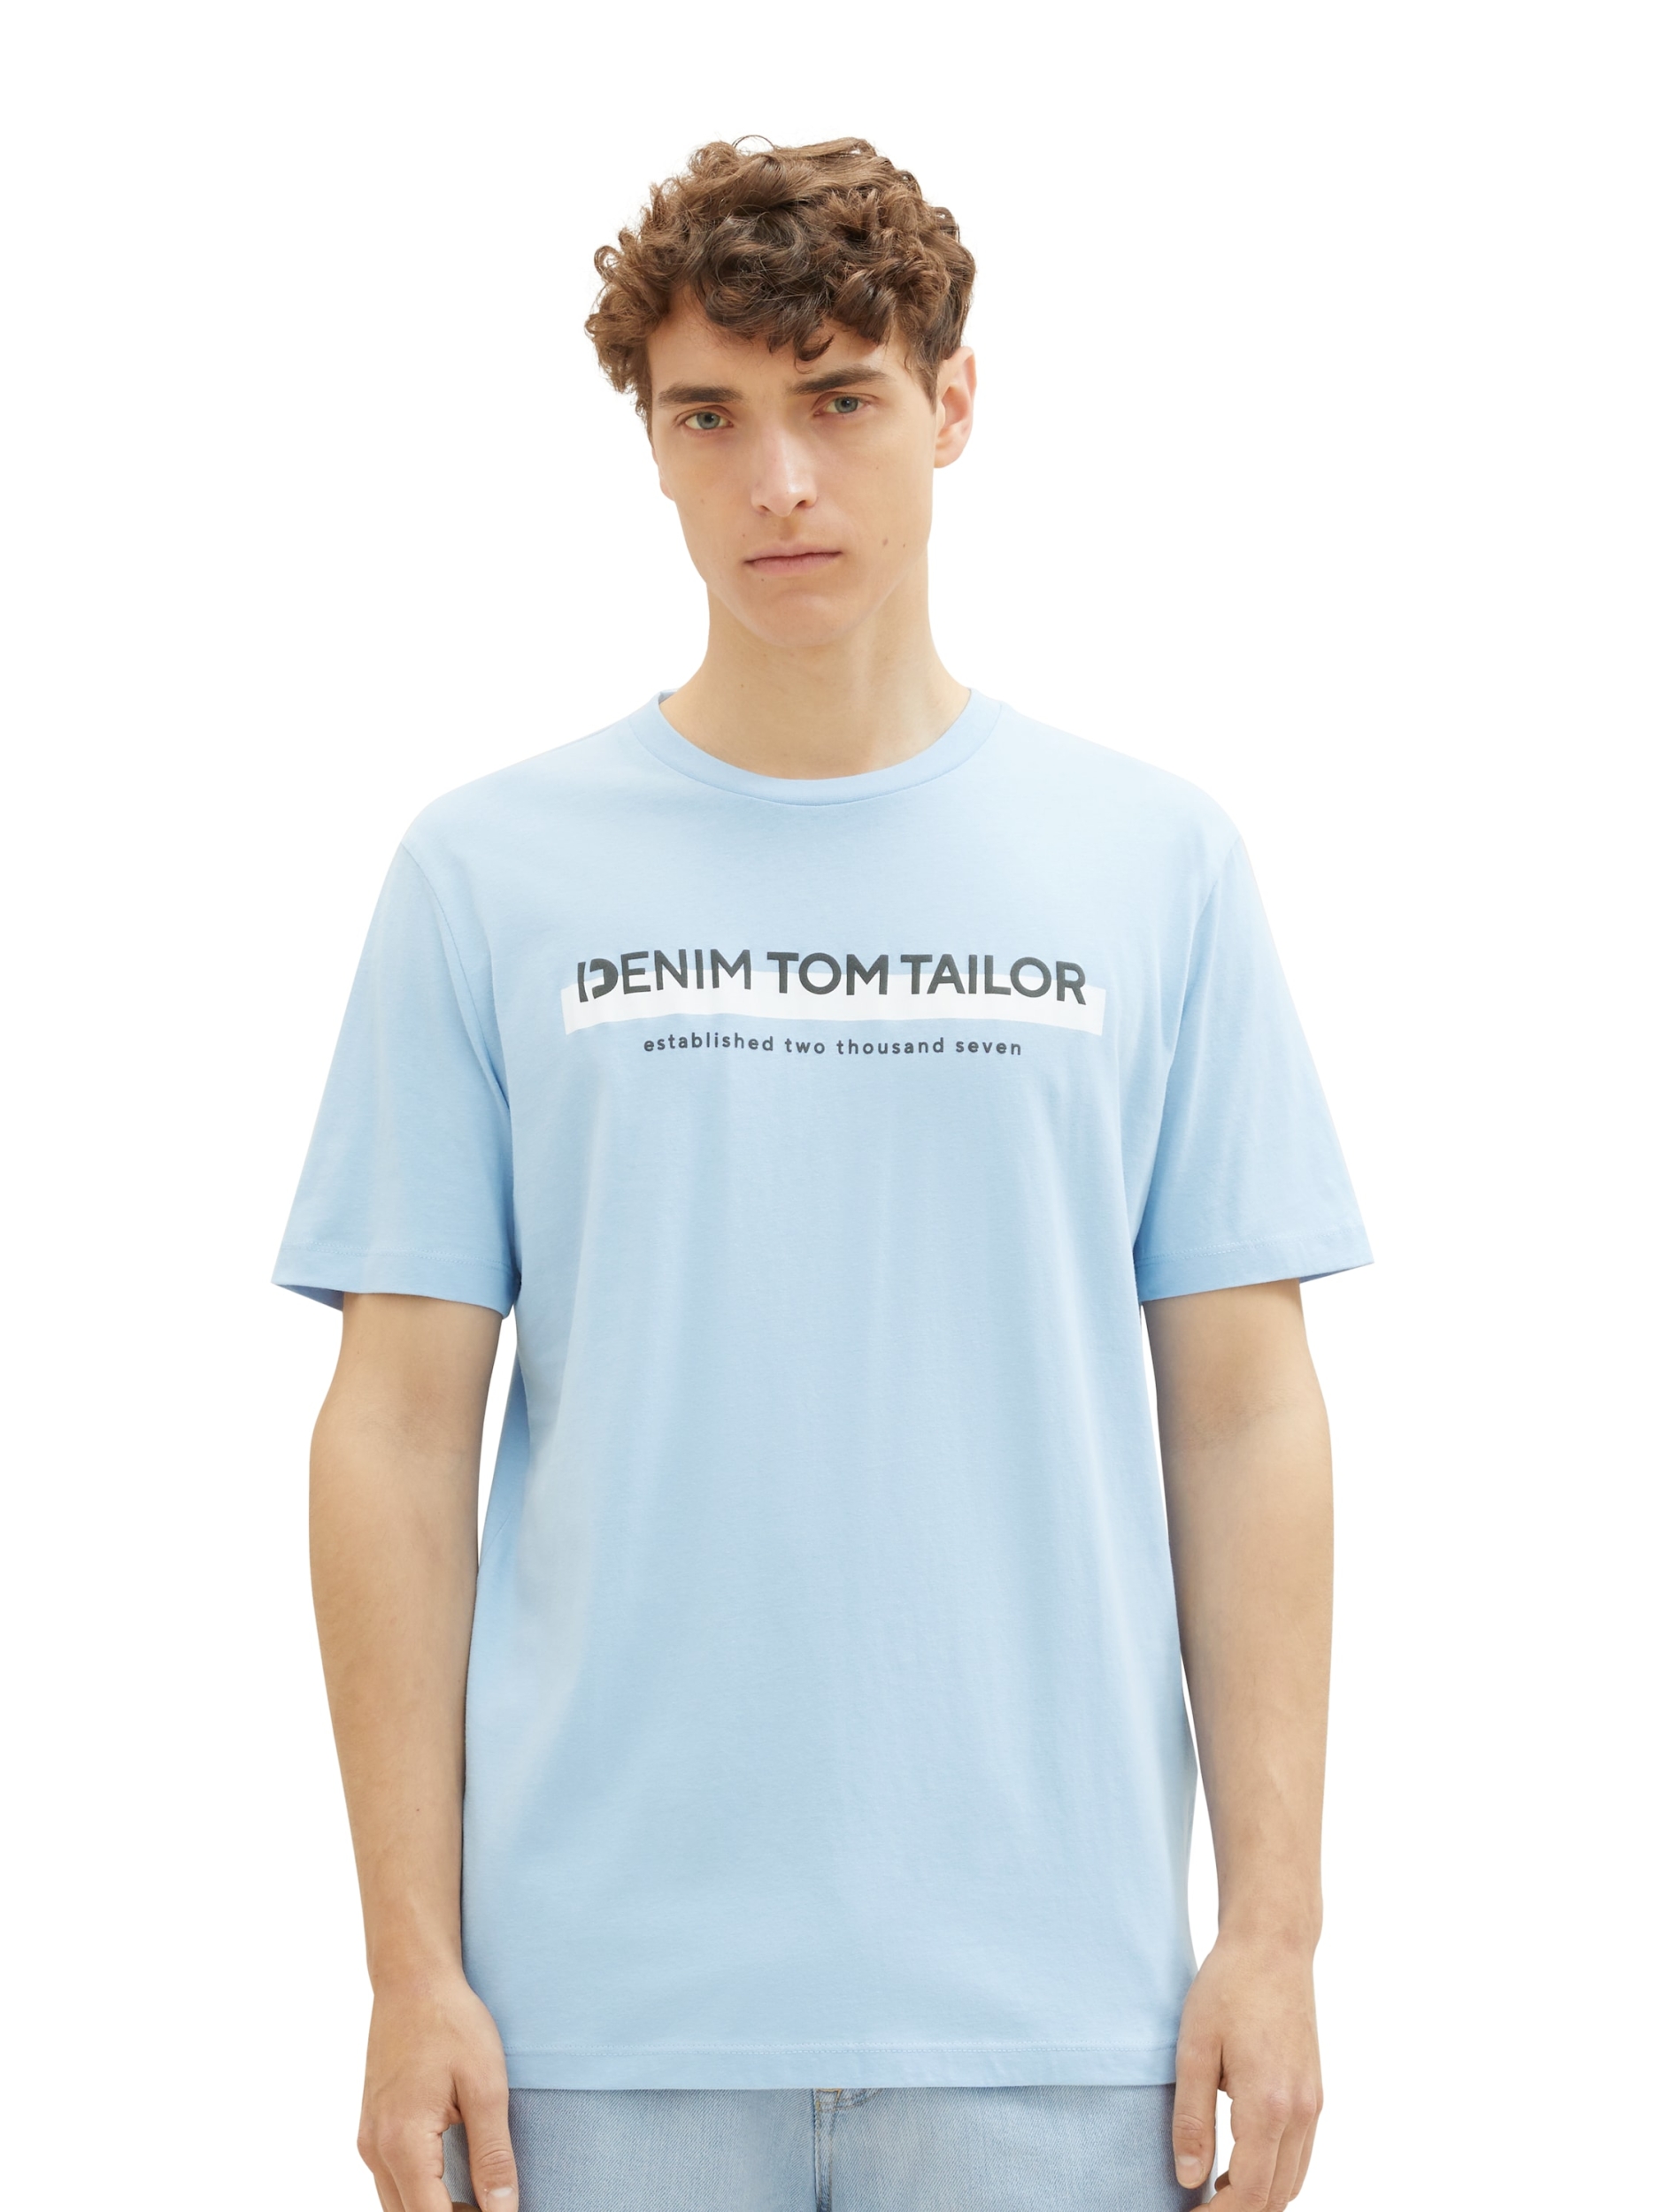 TOM TAILOR printed kaufen t-shirt online